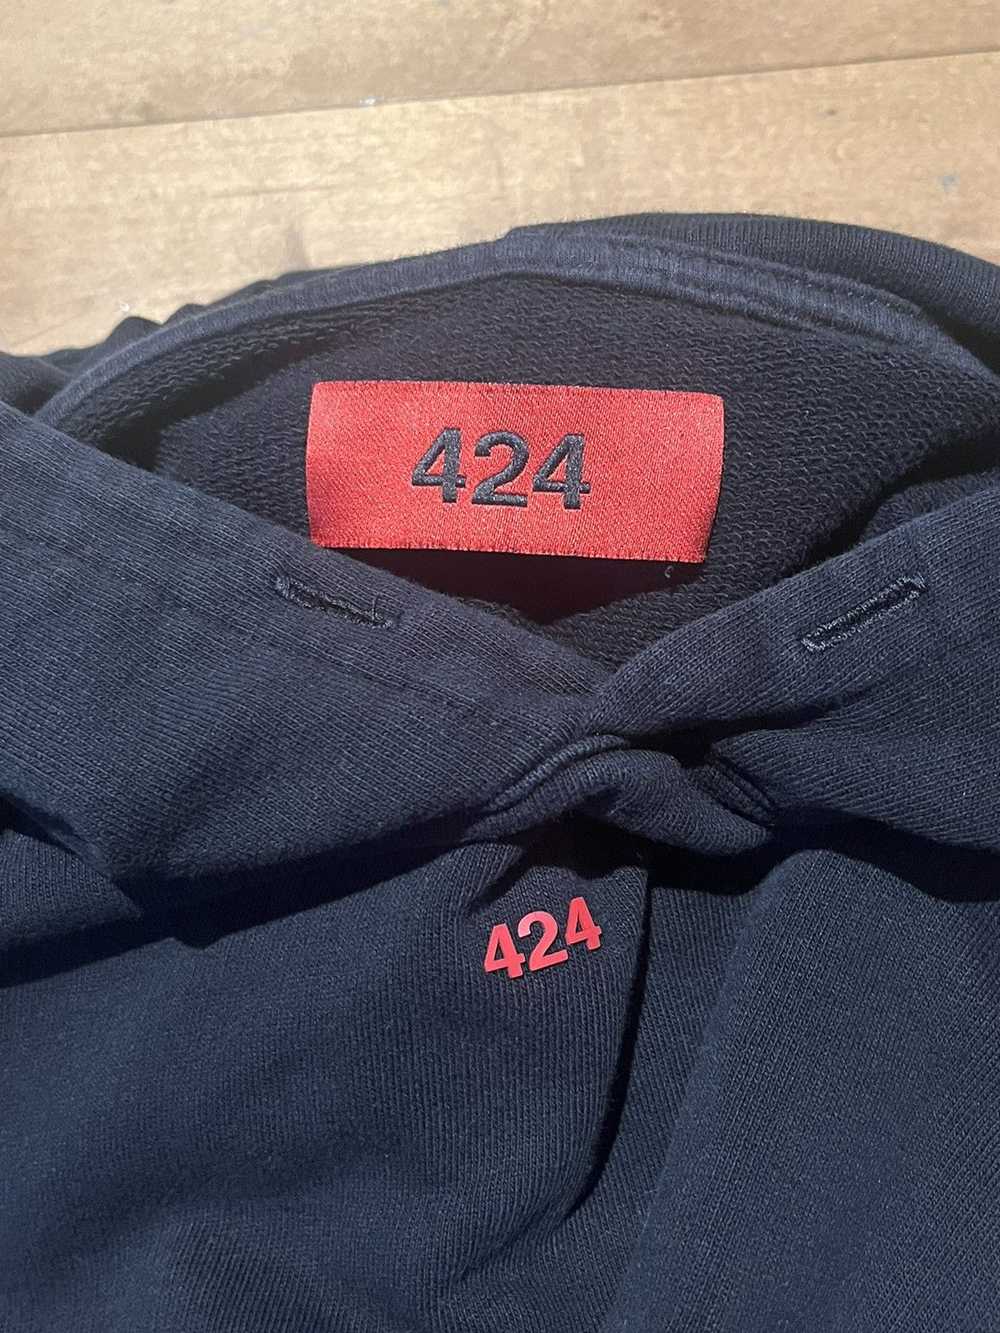 424 On Fairfax Black small logo 424 hoodie - image 3